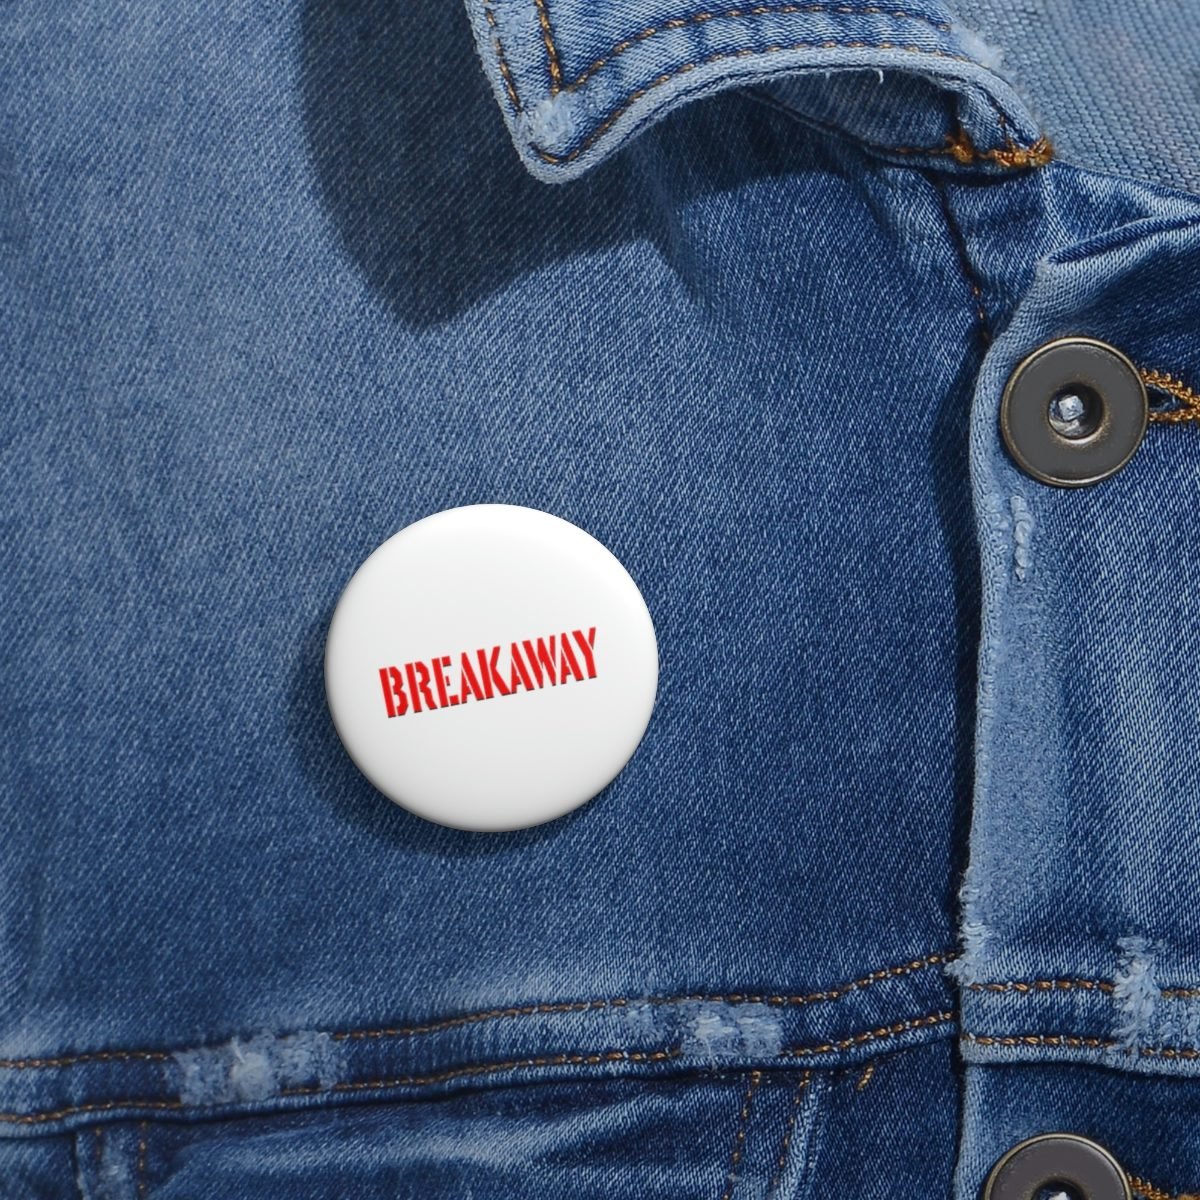 Breakaway Logo White Pin Buttons